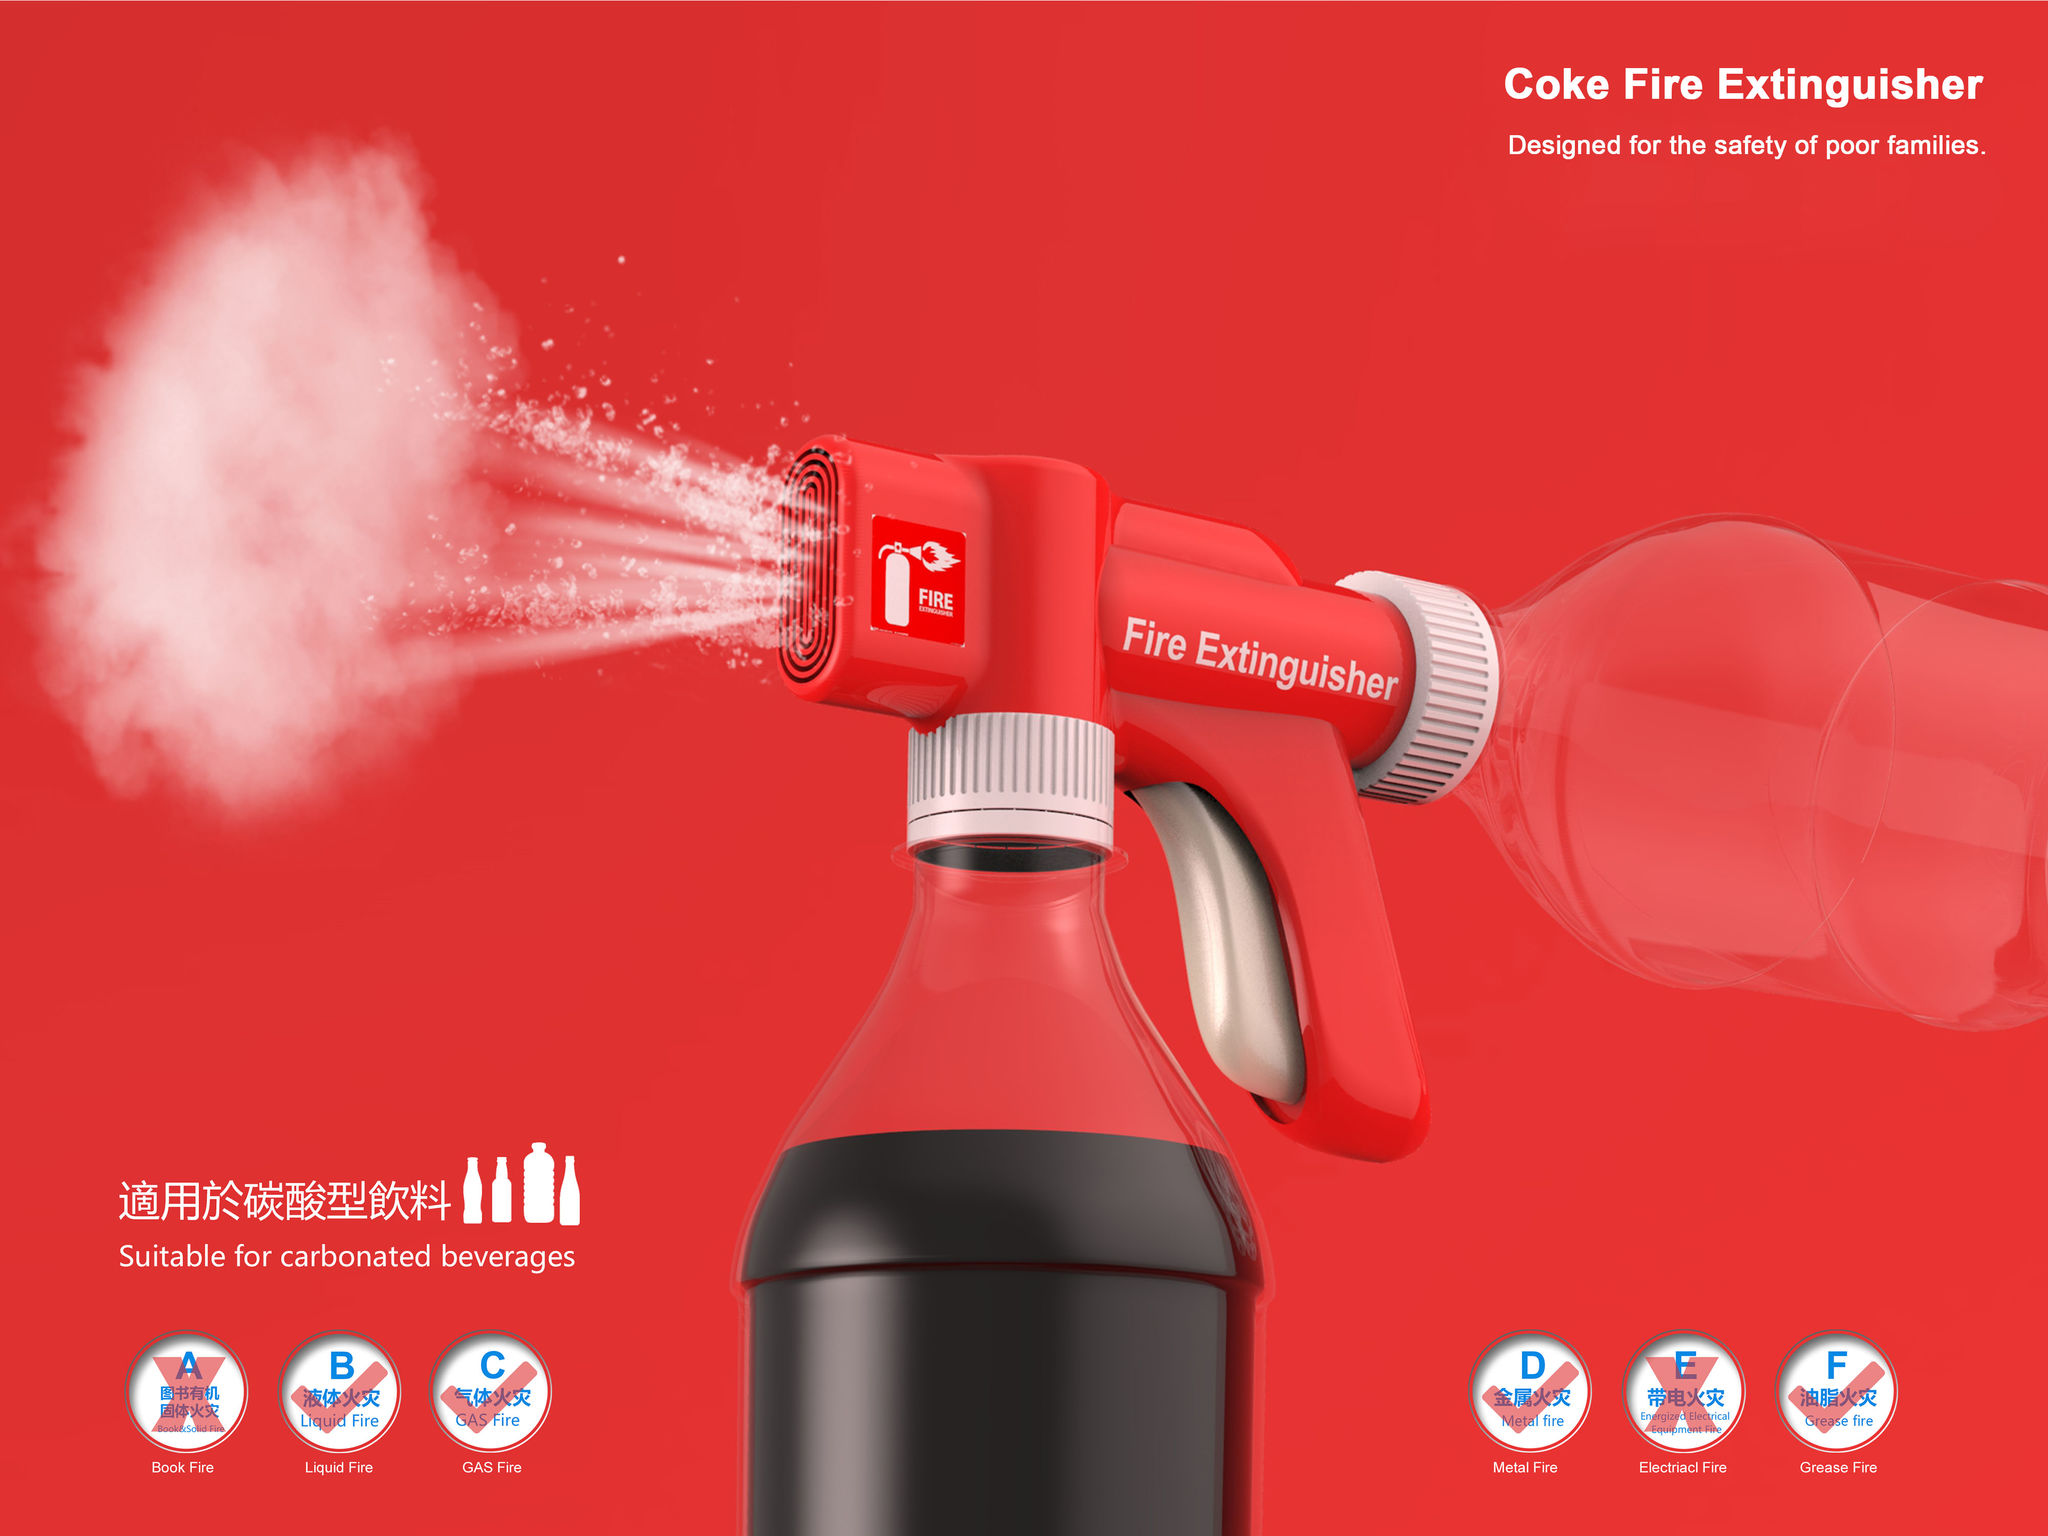 Coke Fire Extinguisher